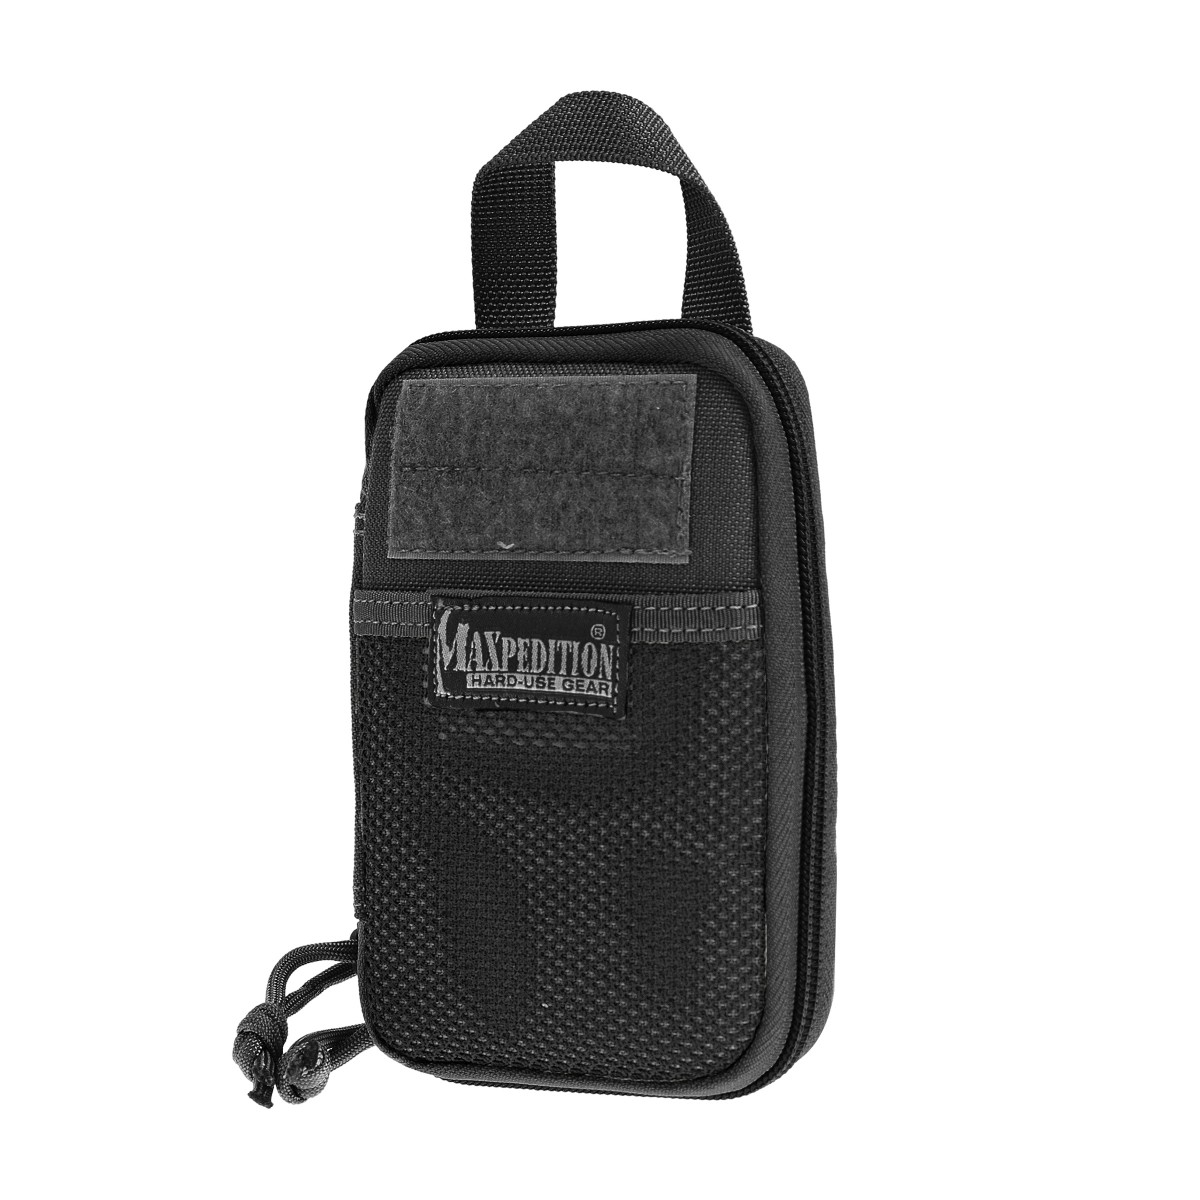 Maxpedition Mini Organizer Black MRZBLK Pocket Backpack EDC Tactical Molle 